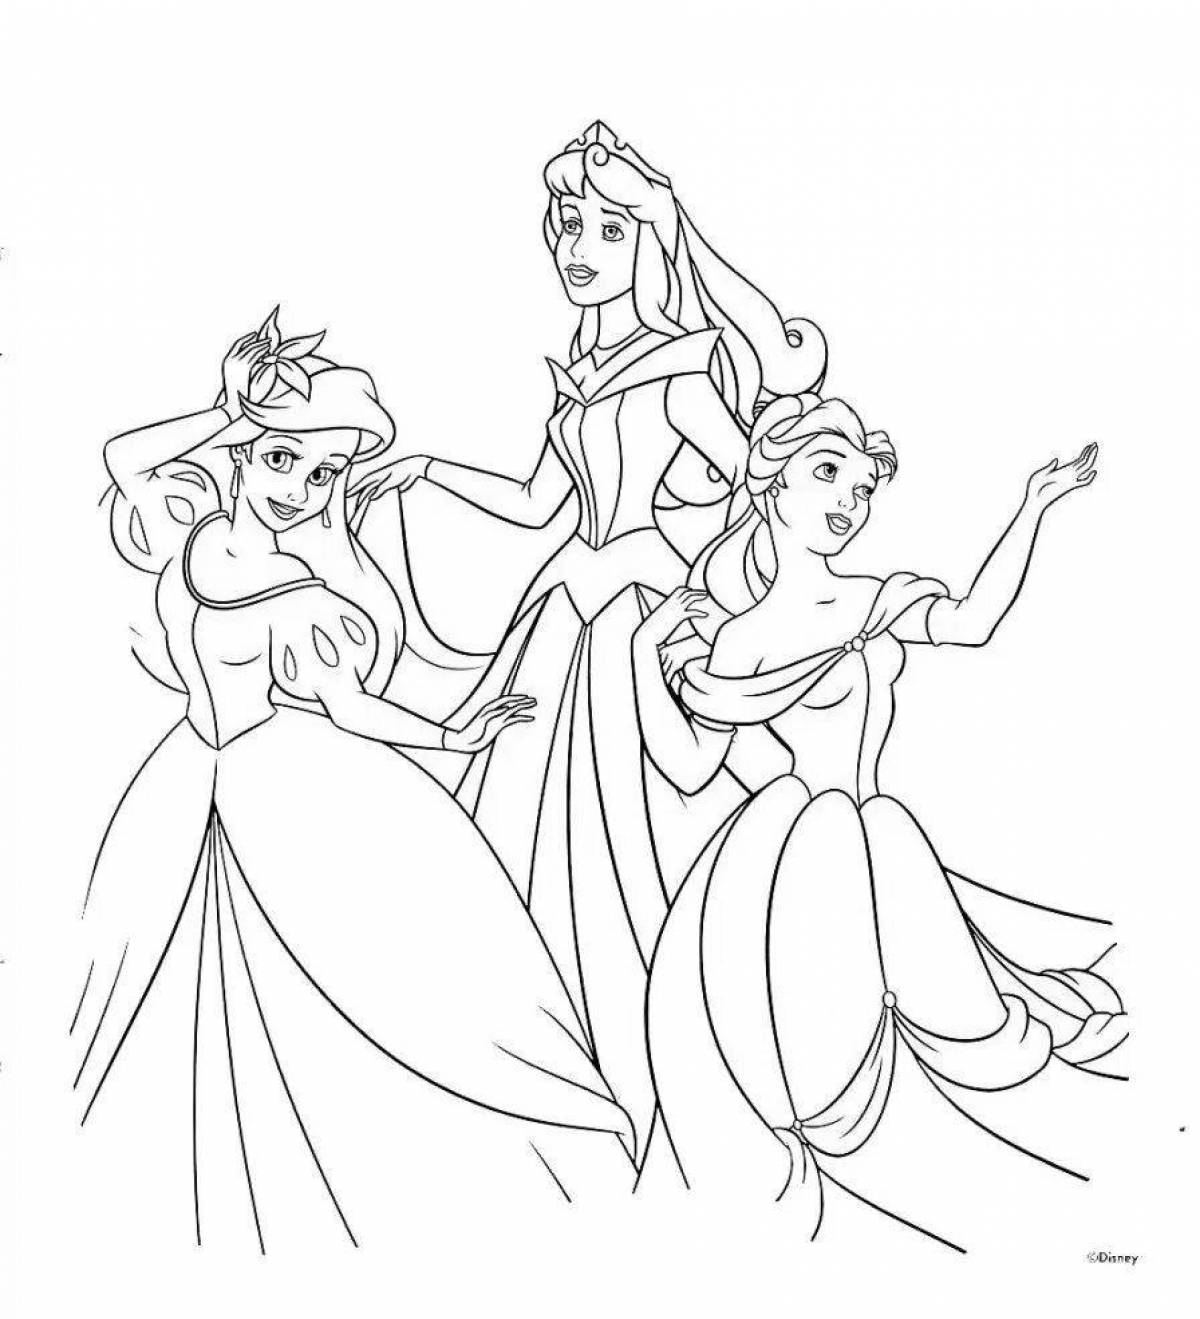 Exquisite coloring of all disney princesses